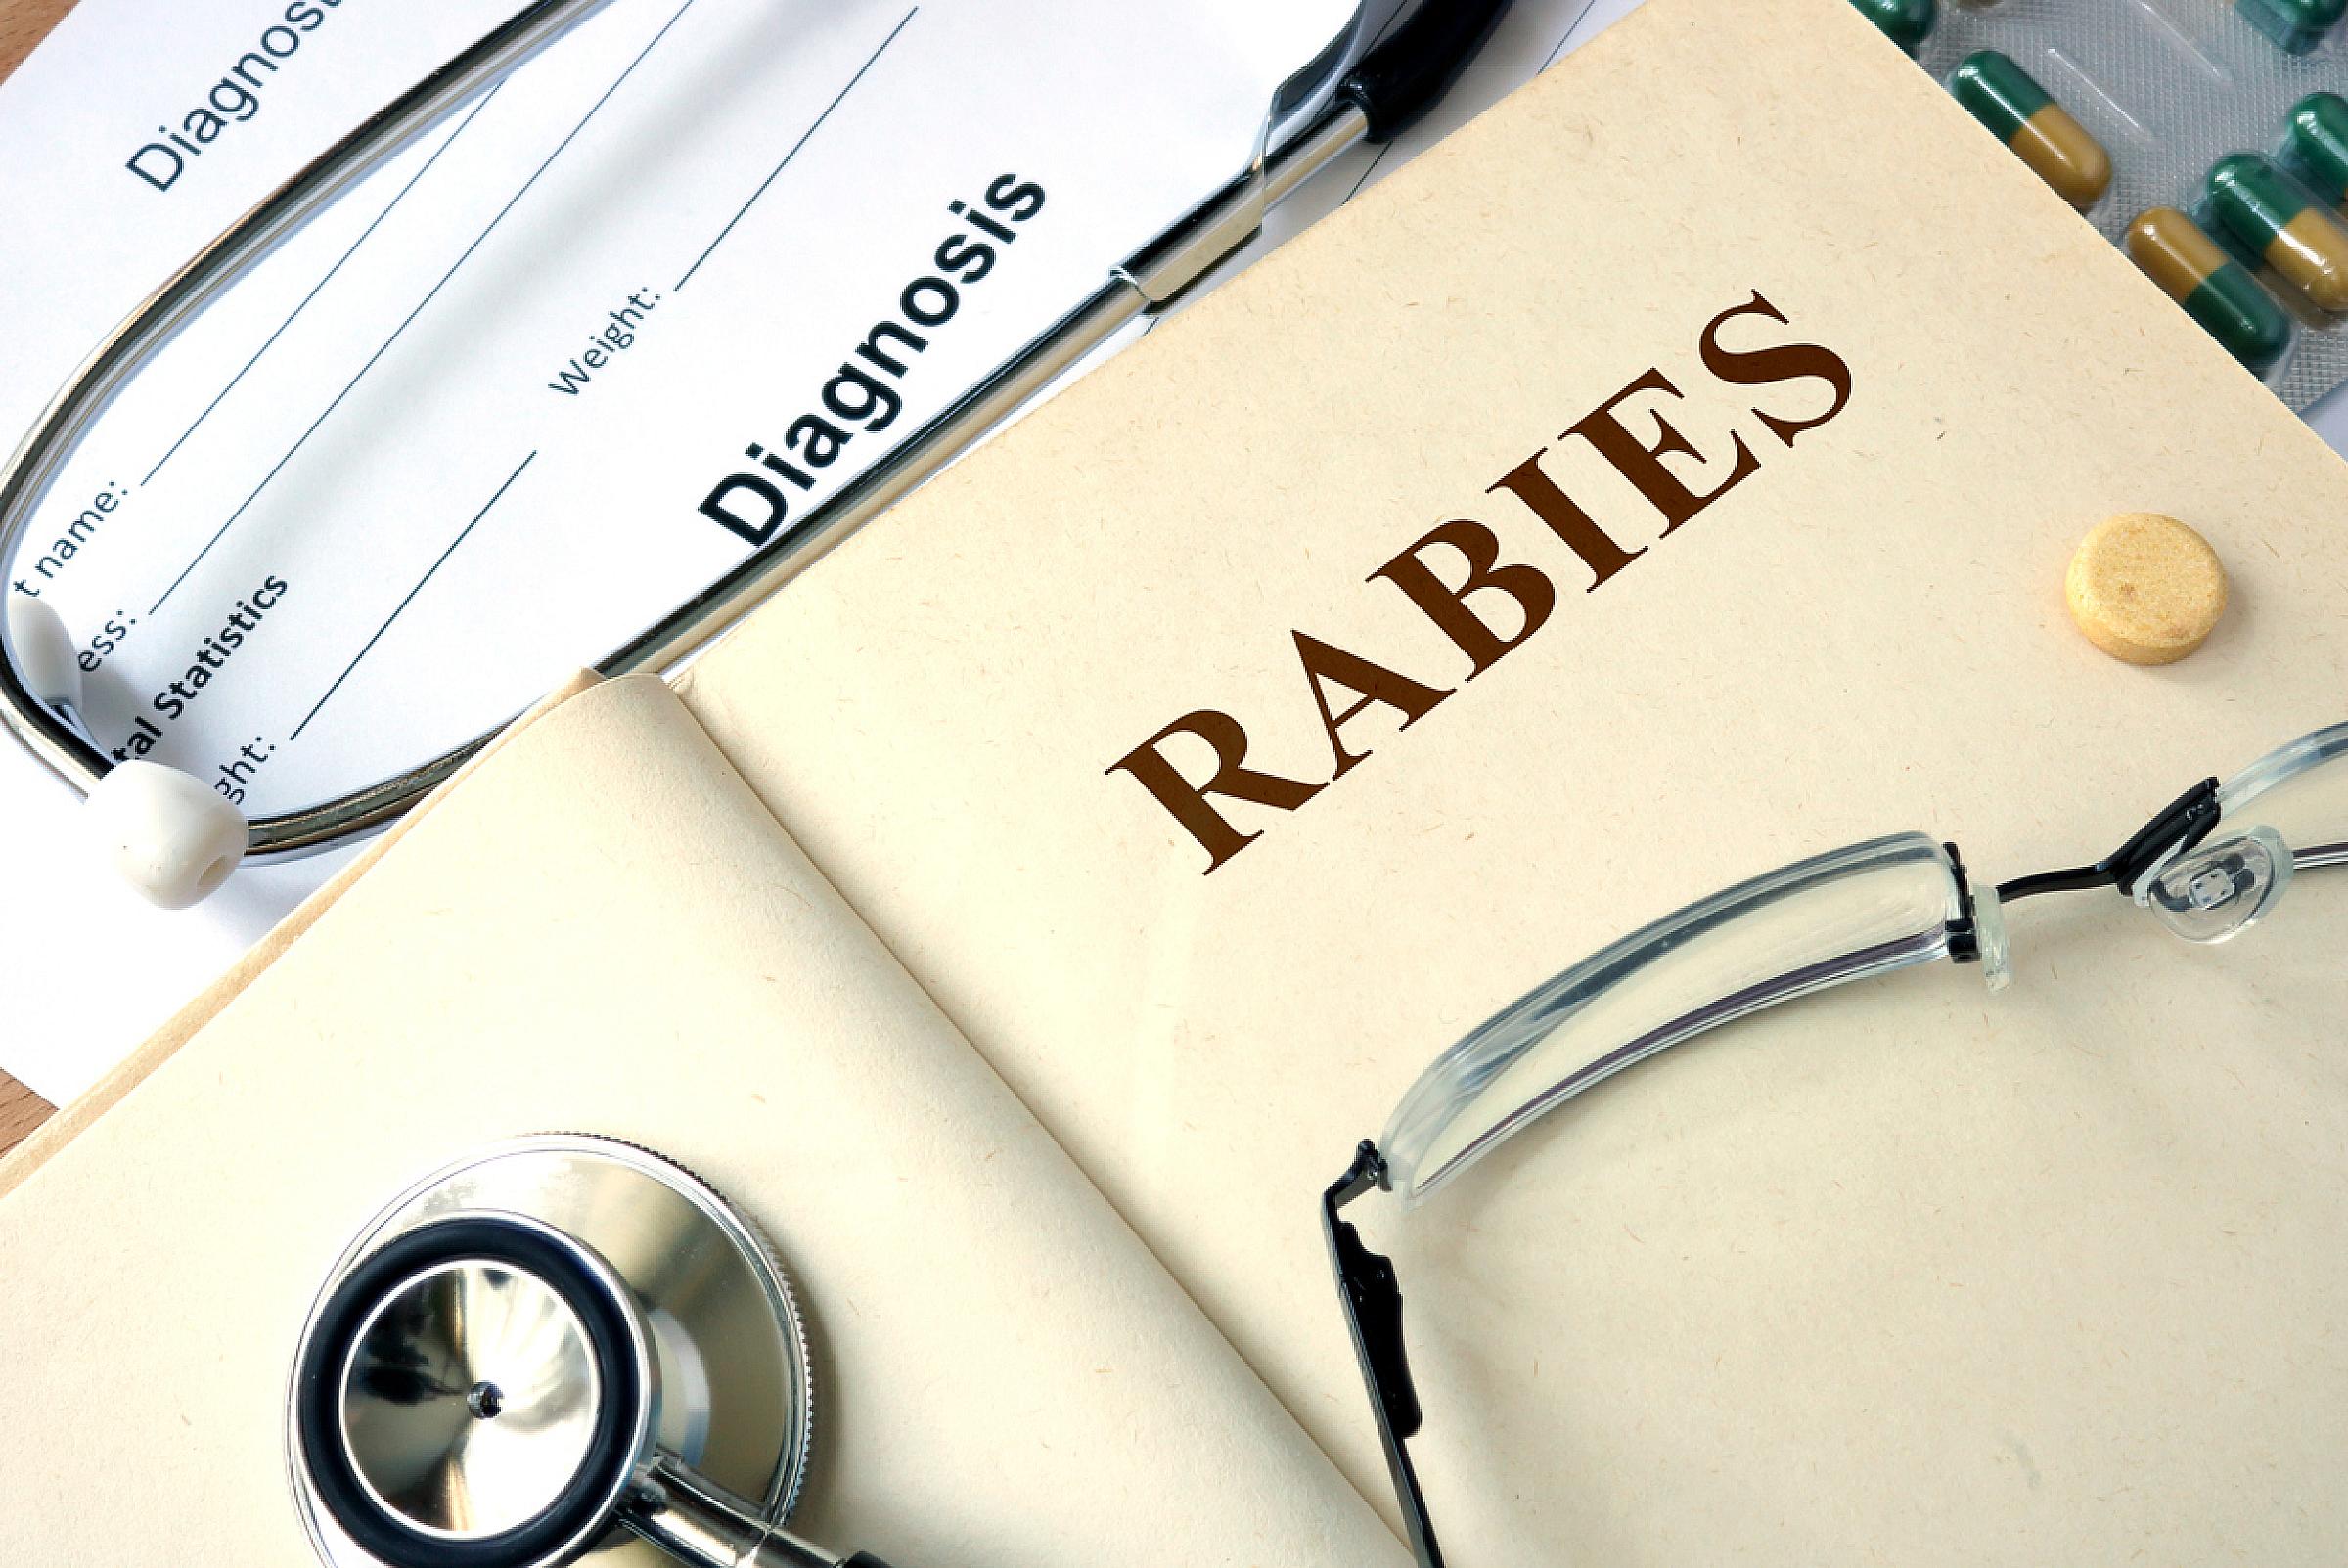 "Rabies" on medical diagnosis documentation